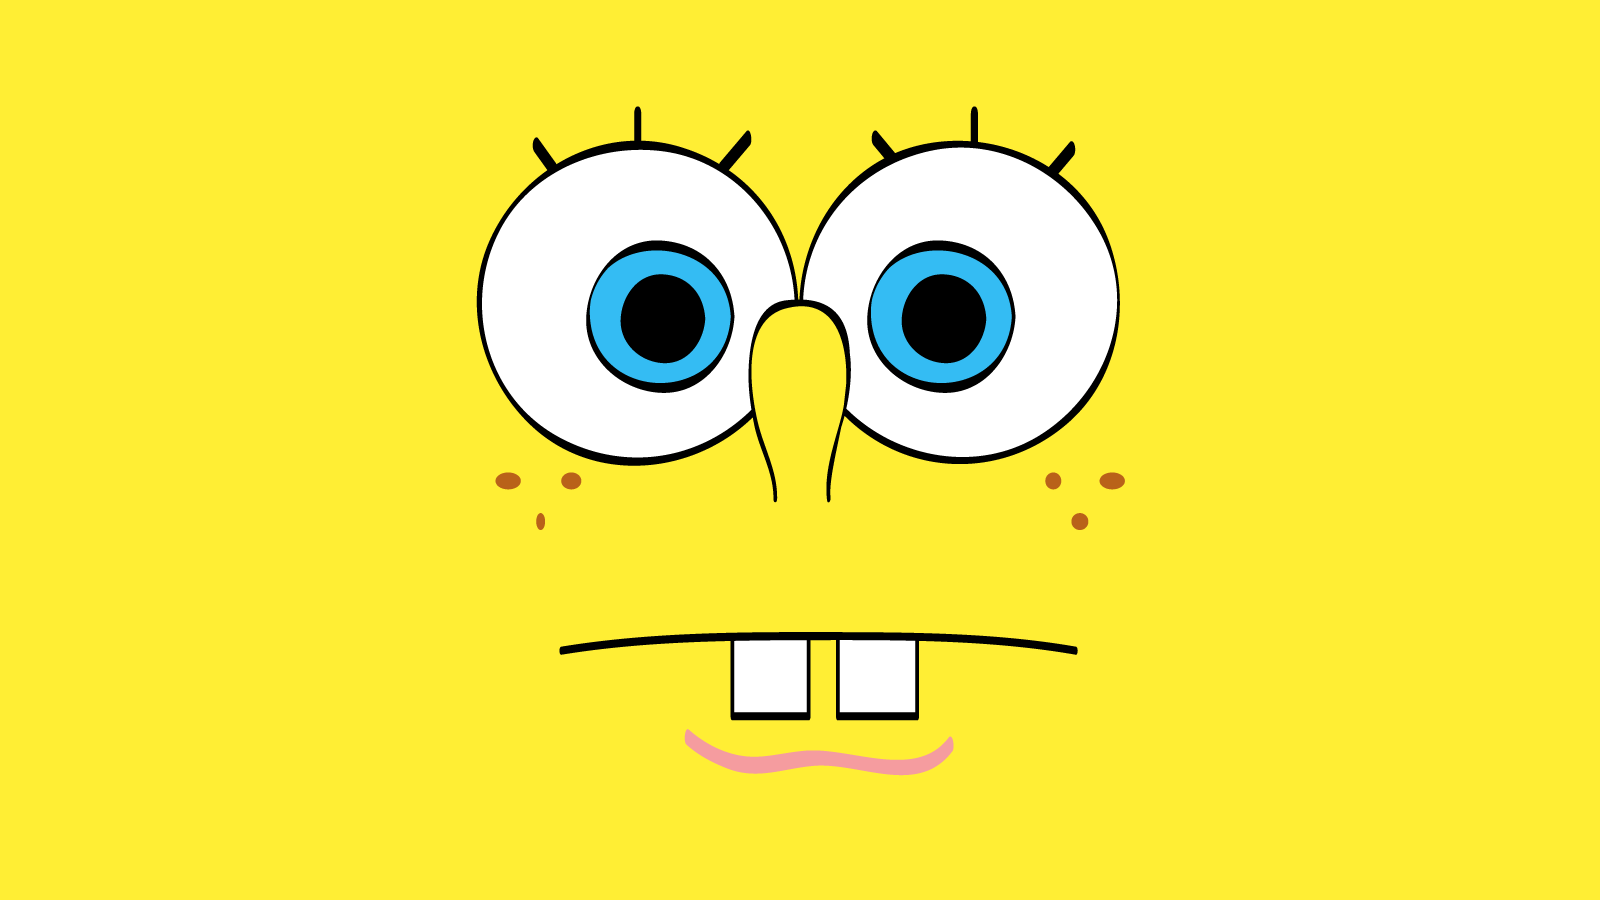 Popular spongebob Image from March 2011